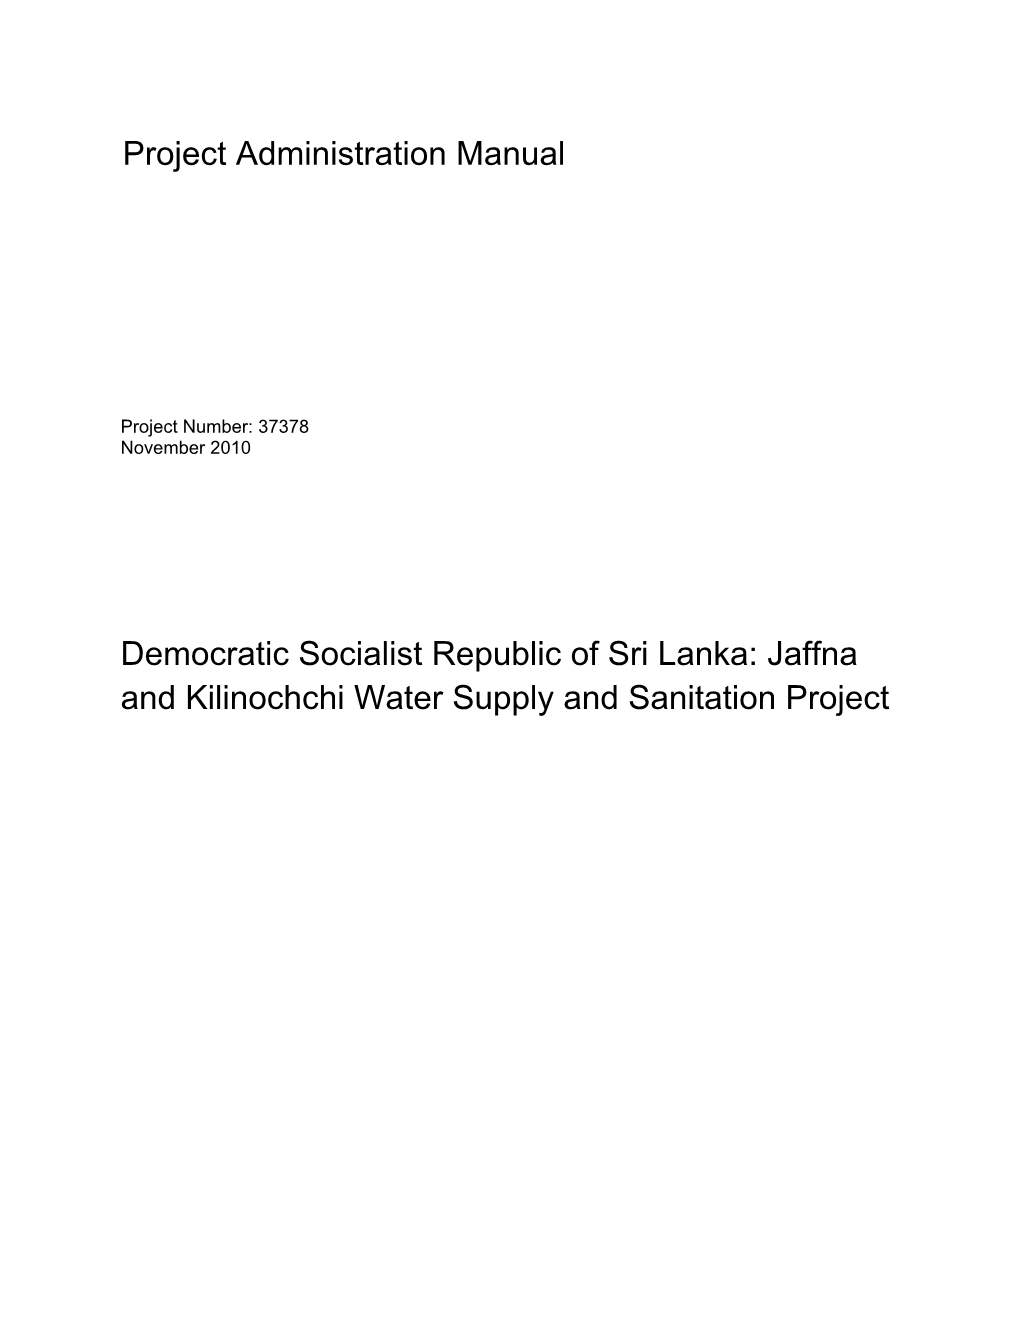 Sri Lanka: Jaffna and Kilinochchi Water Supply and Sanitation Project